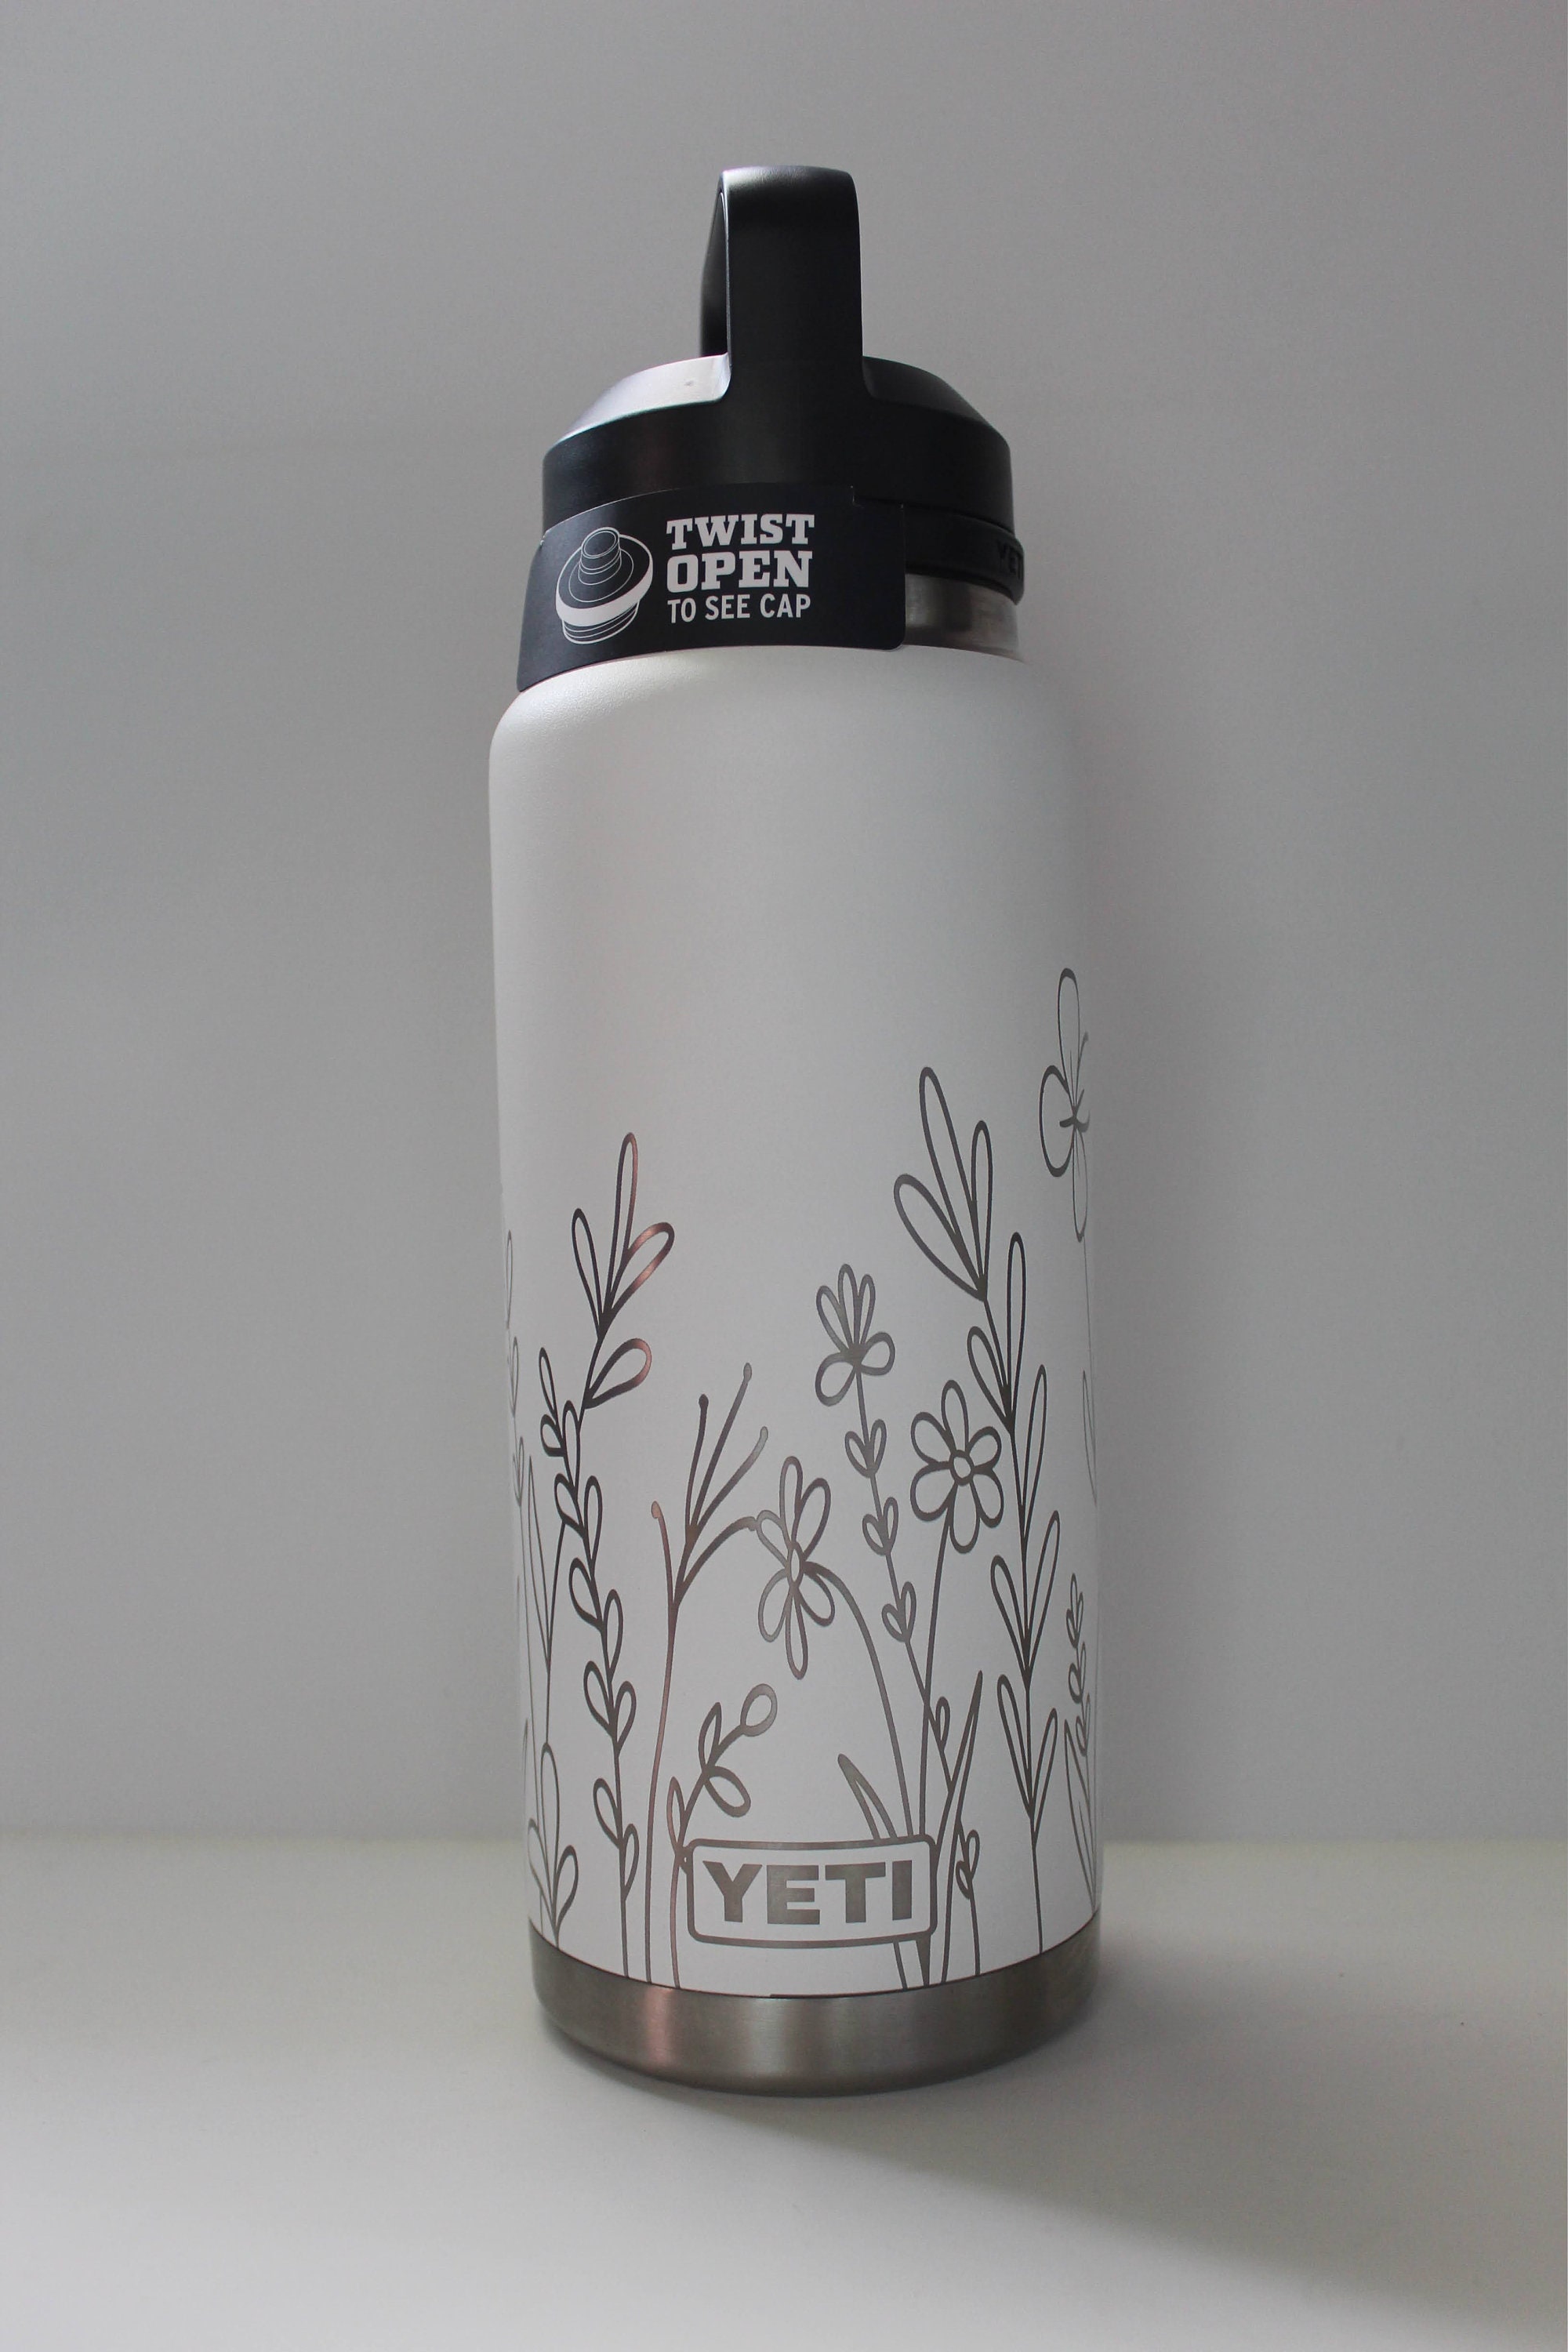 Yeti Rambler 36 fl oz Water Bottle - Pink (21071070030) for sale